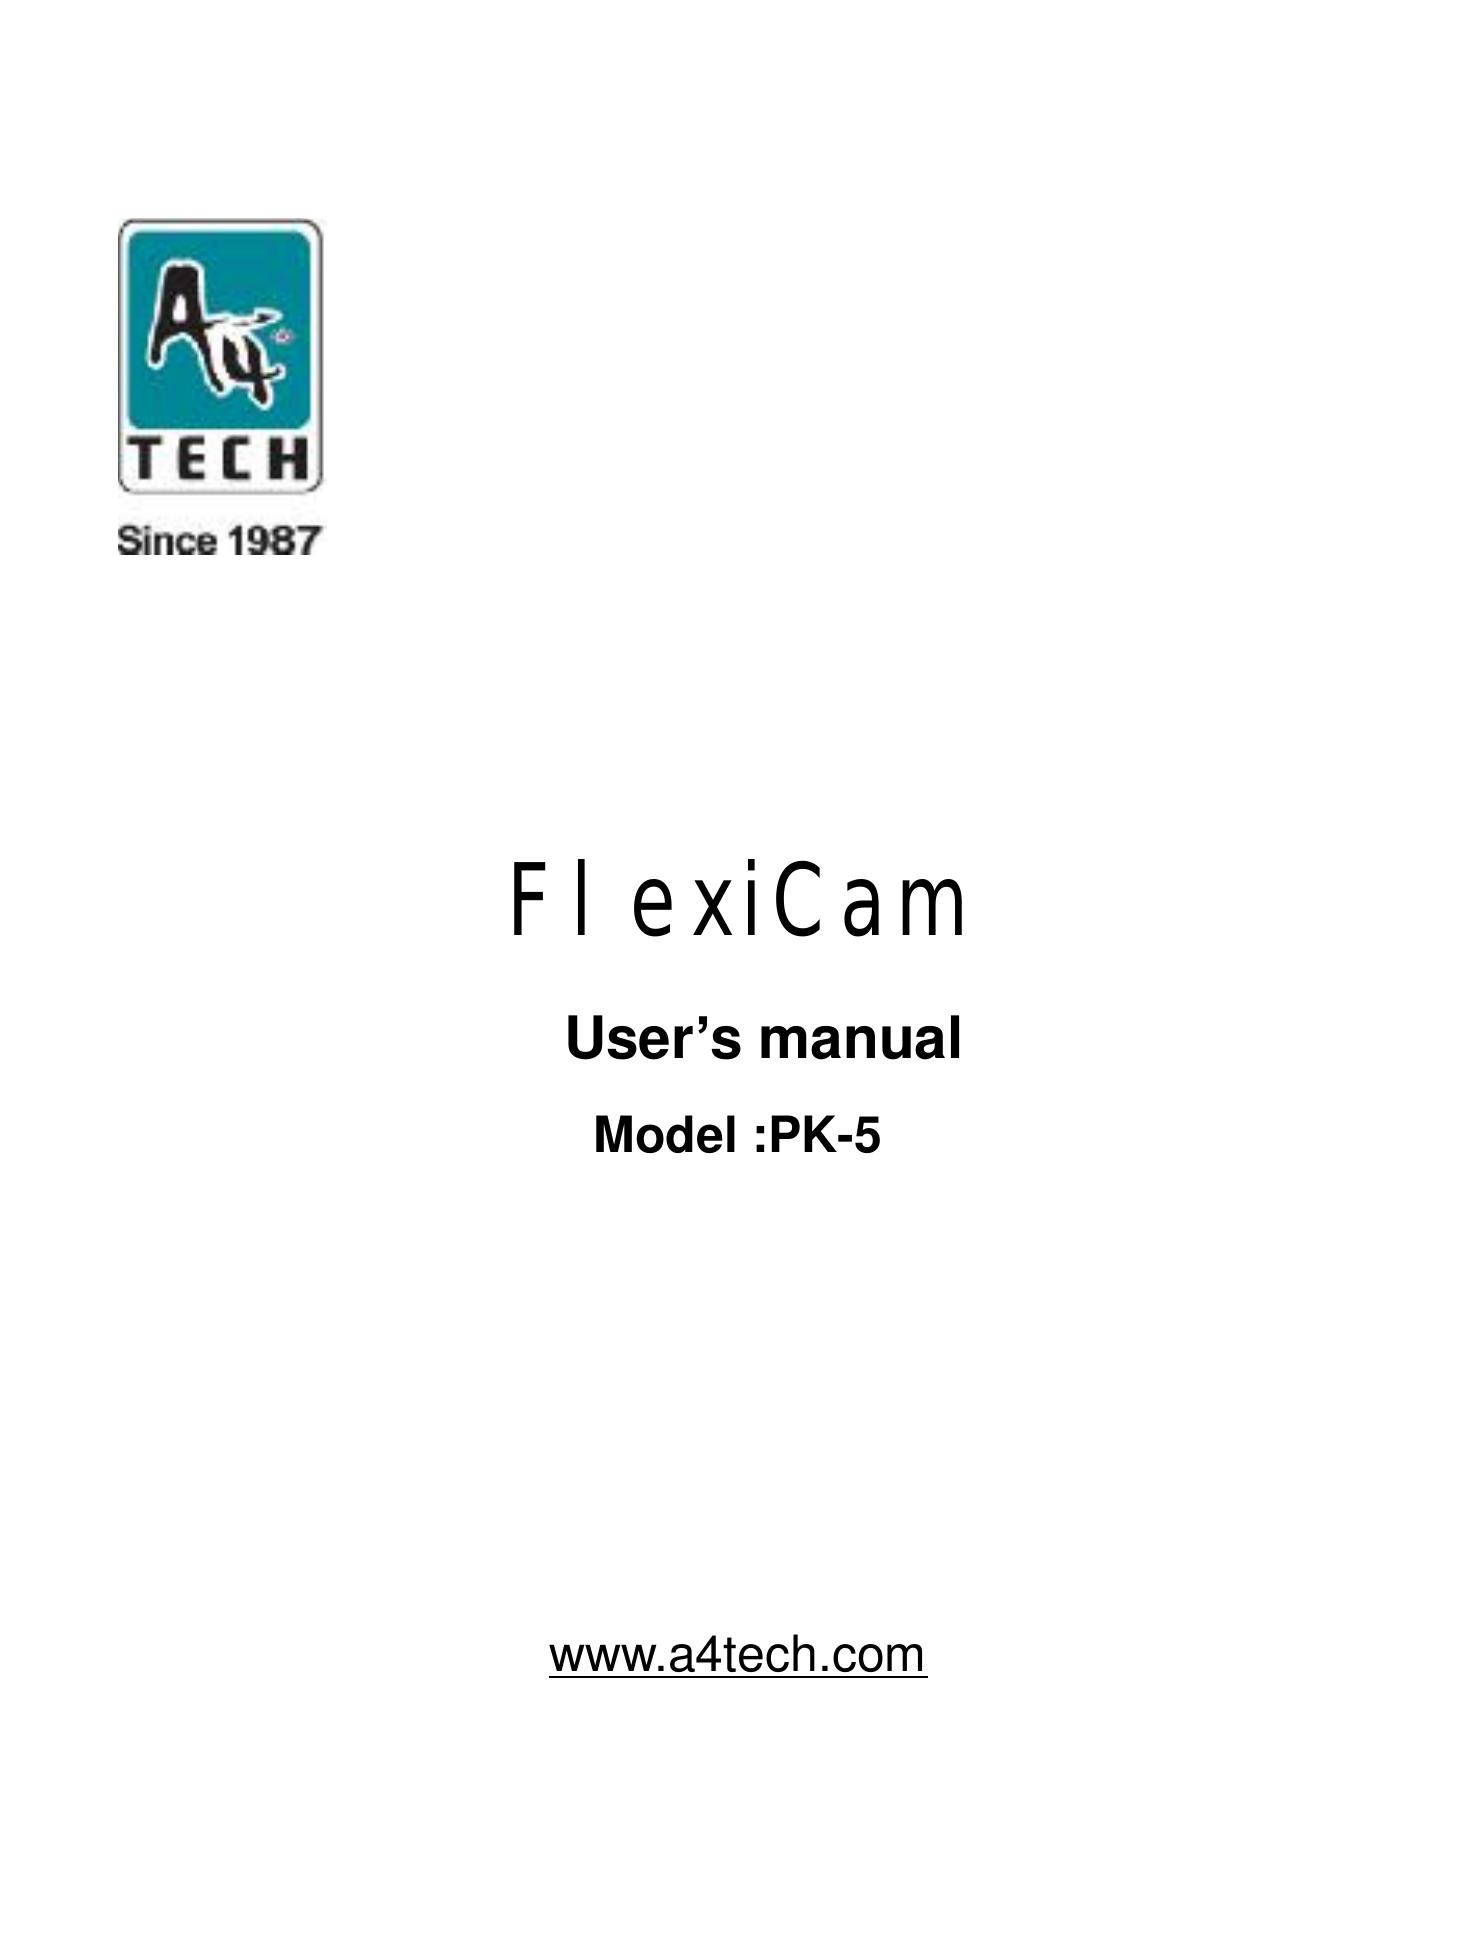 A4 Tech. PK-5 Digital Camera User Manual (Page 1)